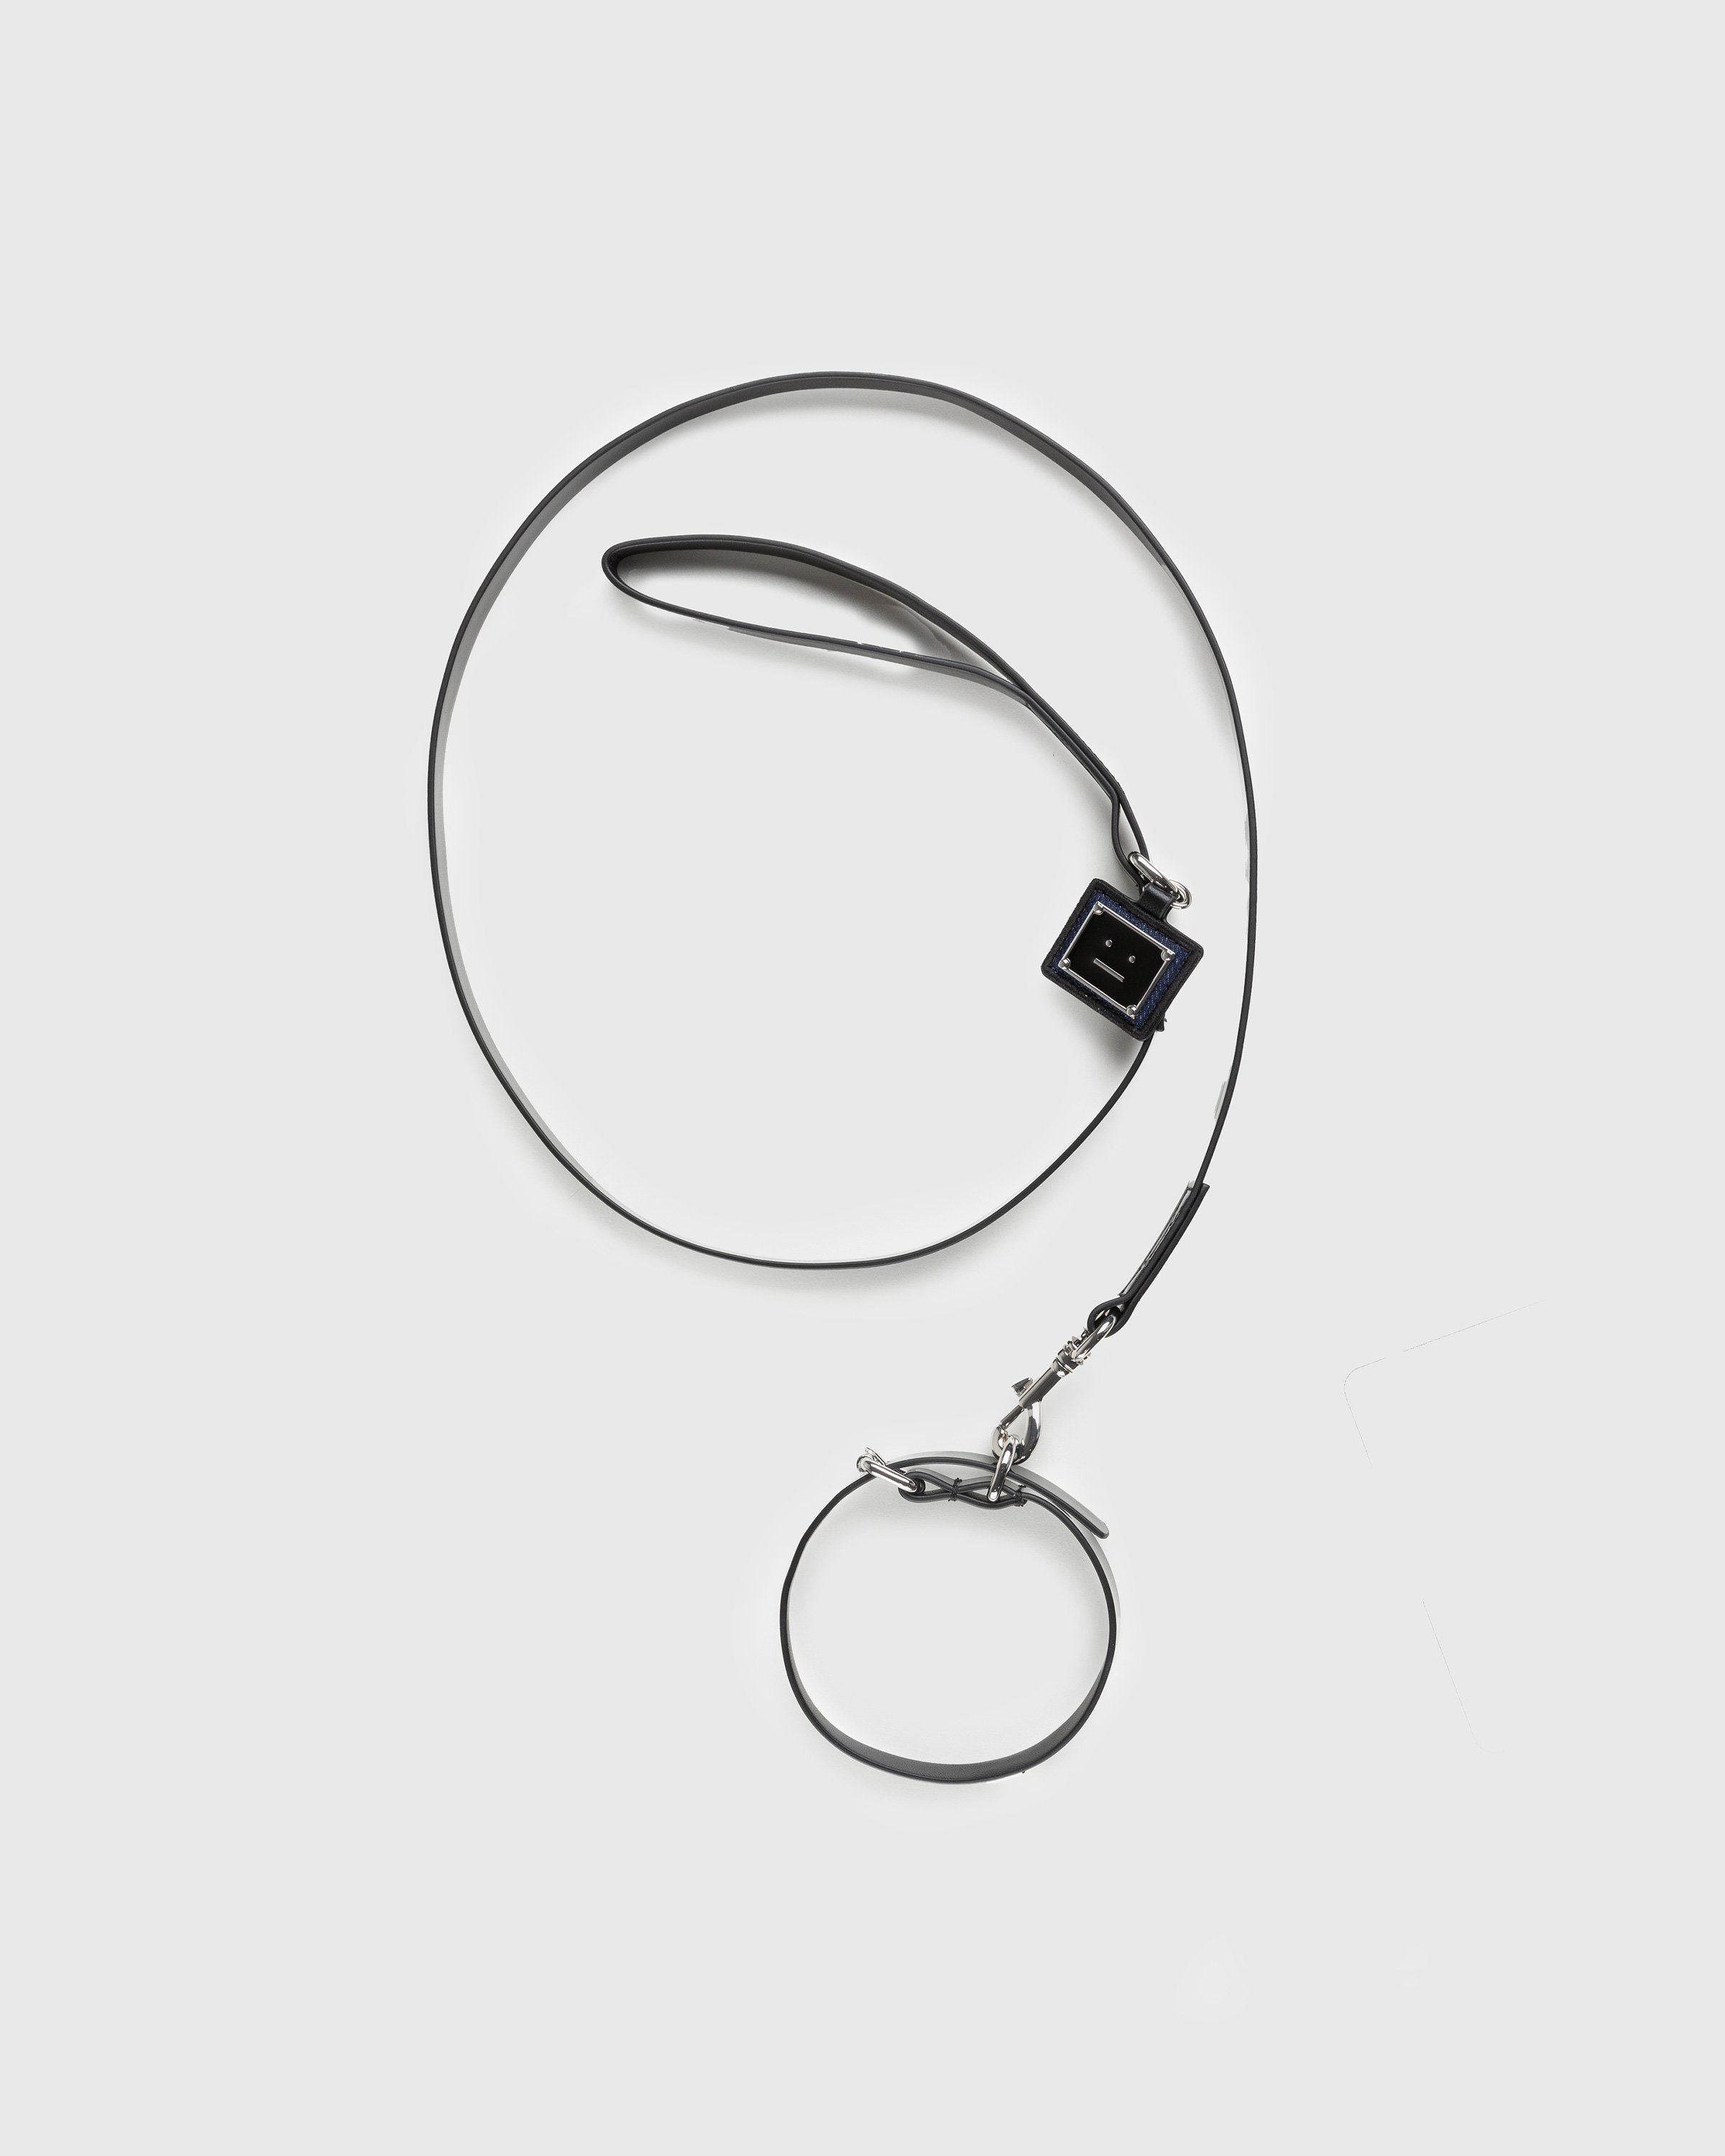 Acne Studios - Face Logo Pet Collar and Leash Black - Lifestyle - Black - Image 1